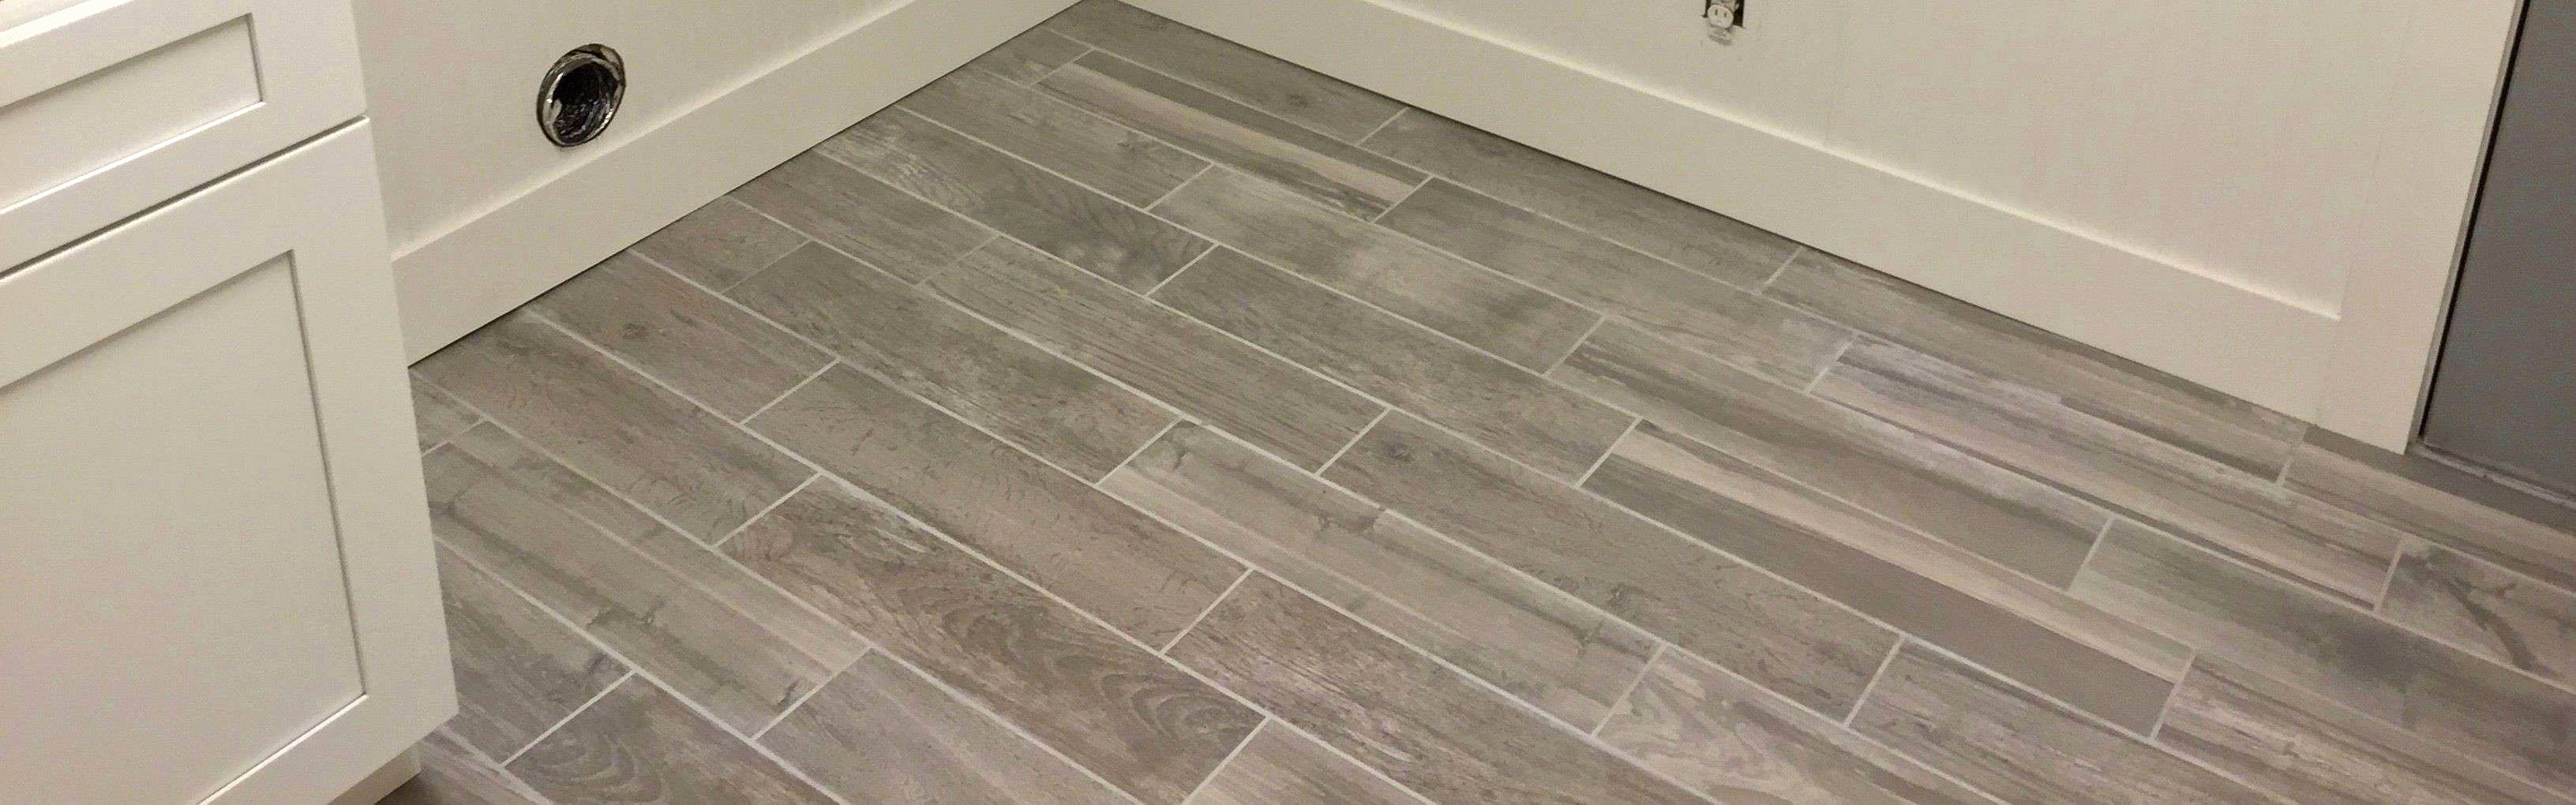 hardwood floor ideas styles of wood style tiles floor plan ideas within unique bathroom tiling ideas best h sink install bathroom i 0d exciting beautiful fresh bathroom floor